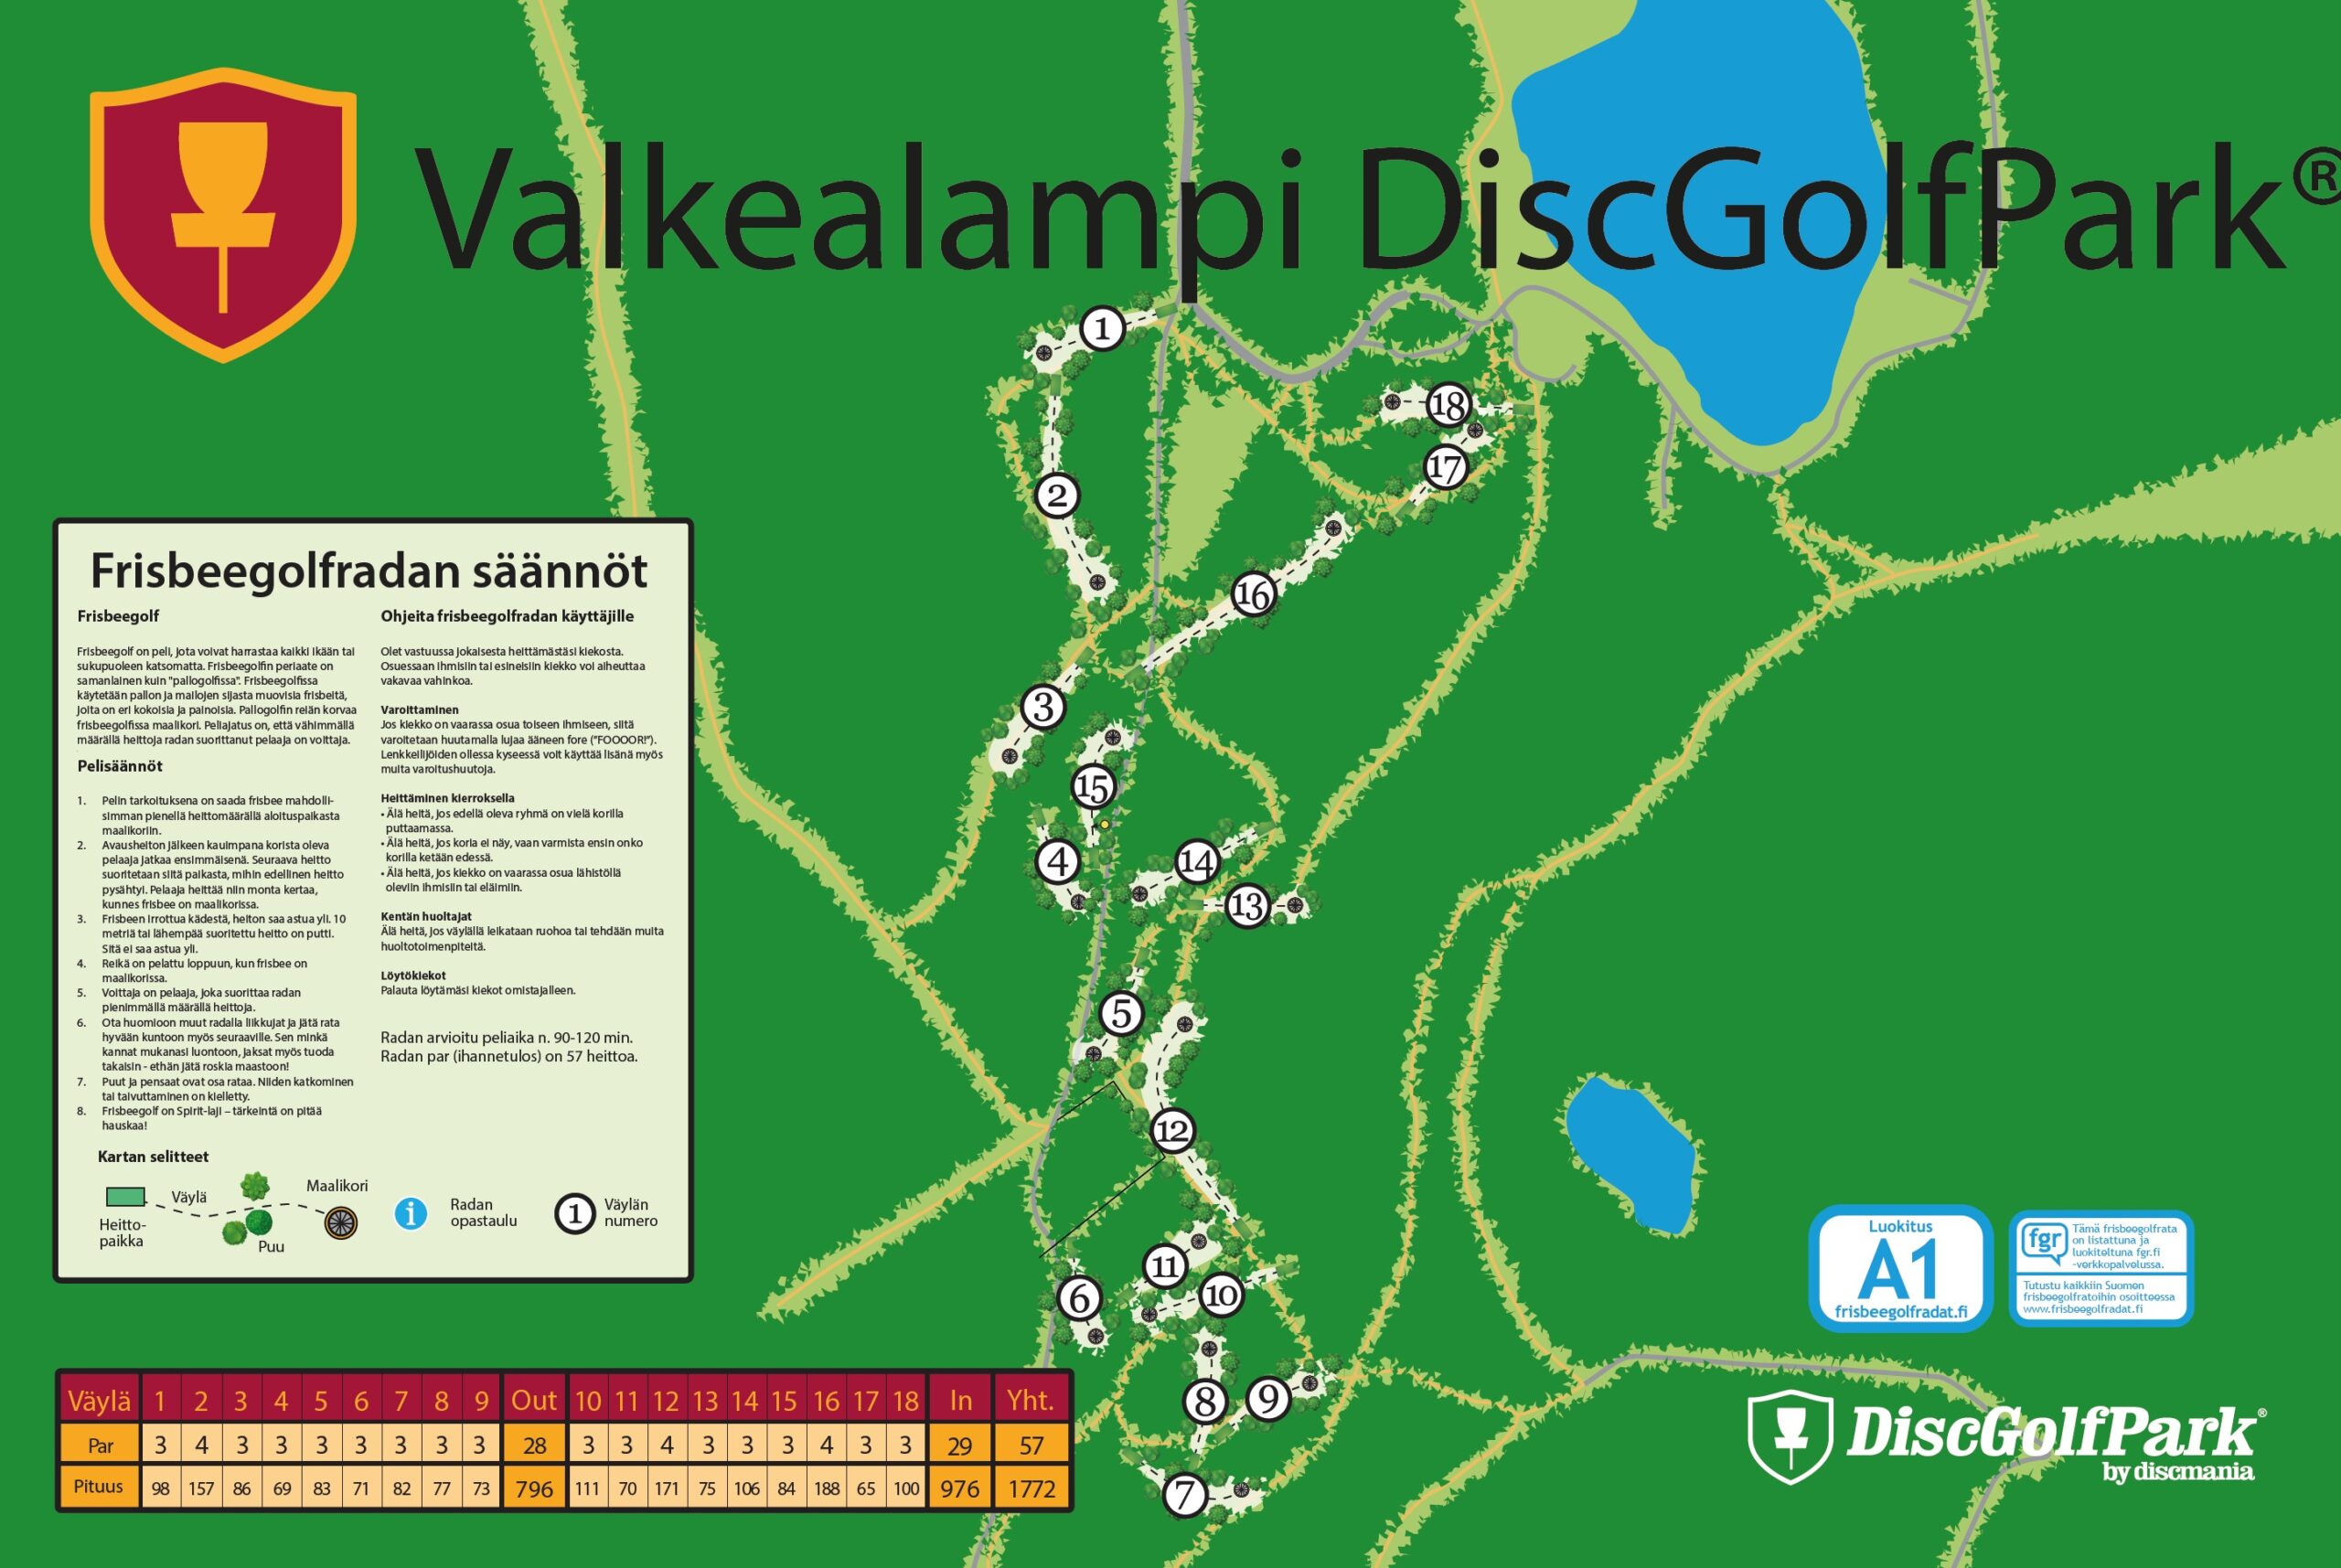 Valkealampi DiscGolfPark - Radat - Frisbeegolfradat.fi